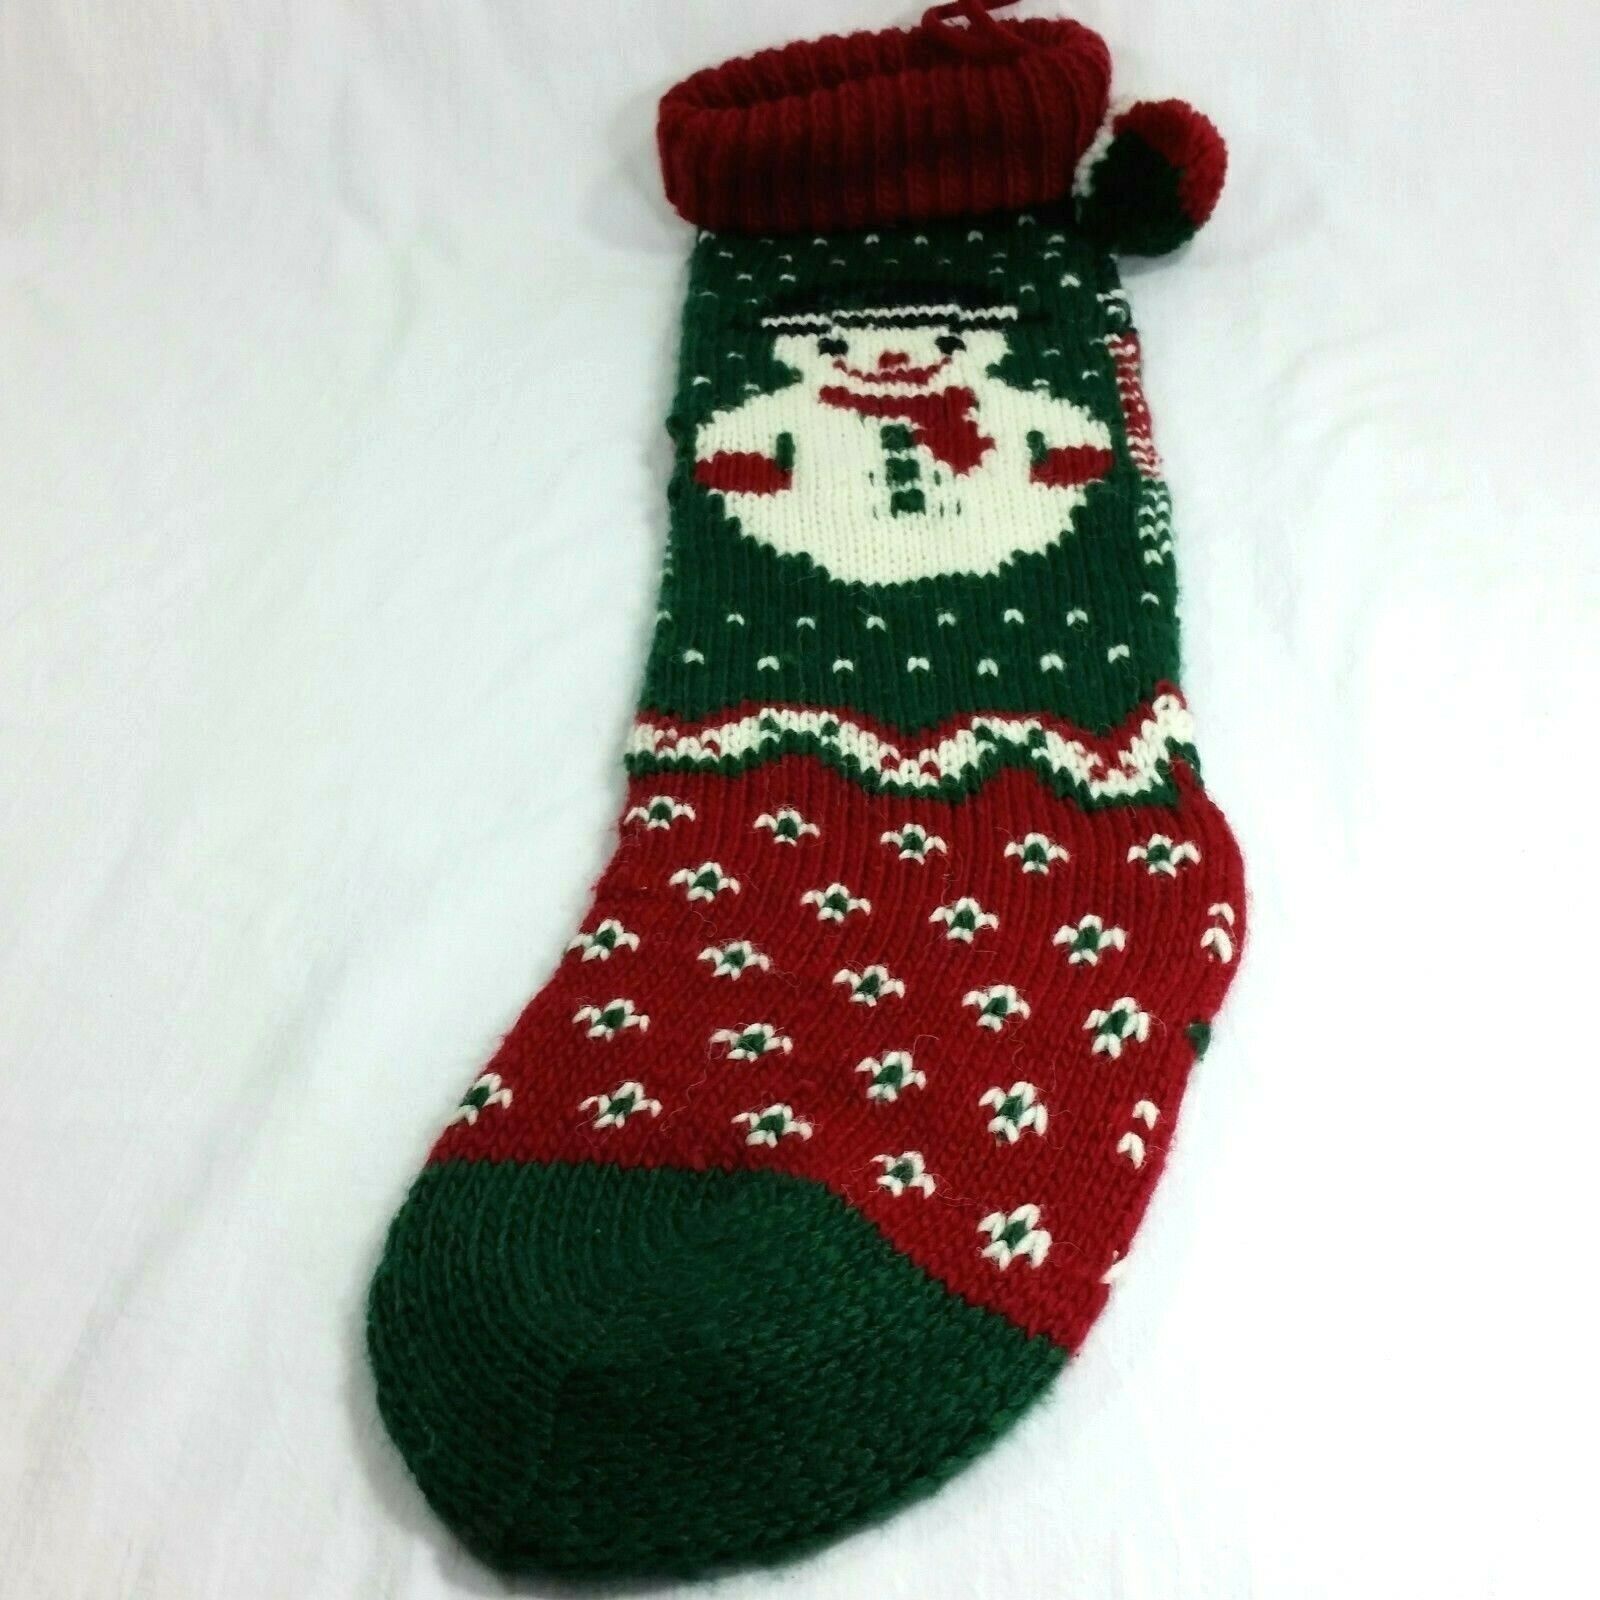 Vintage Snowman Stocking Knit Christmas Pom Pom Fuzzy Red Green White - At Grandma's Table